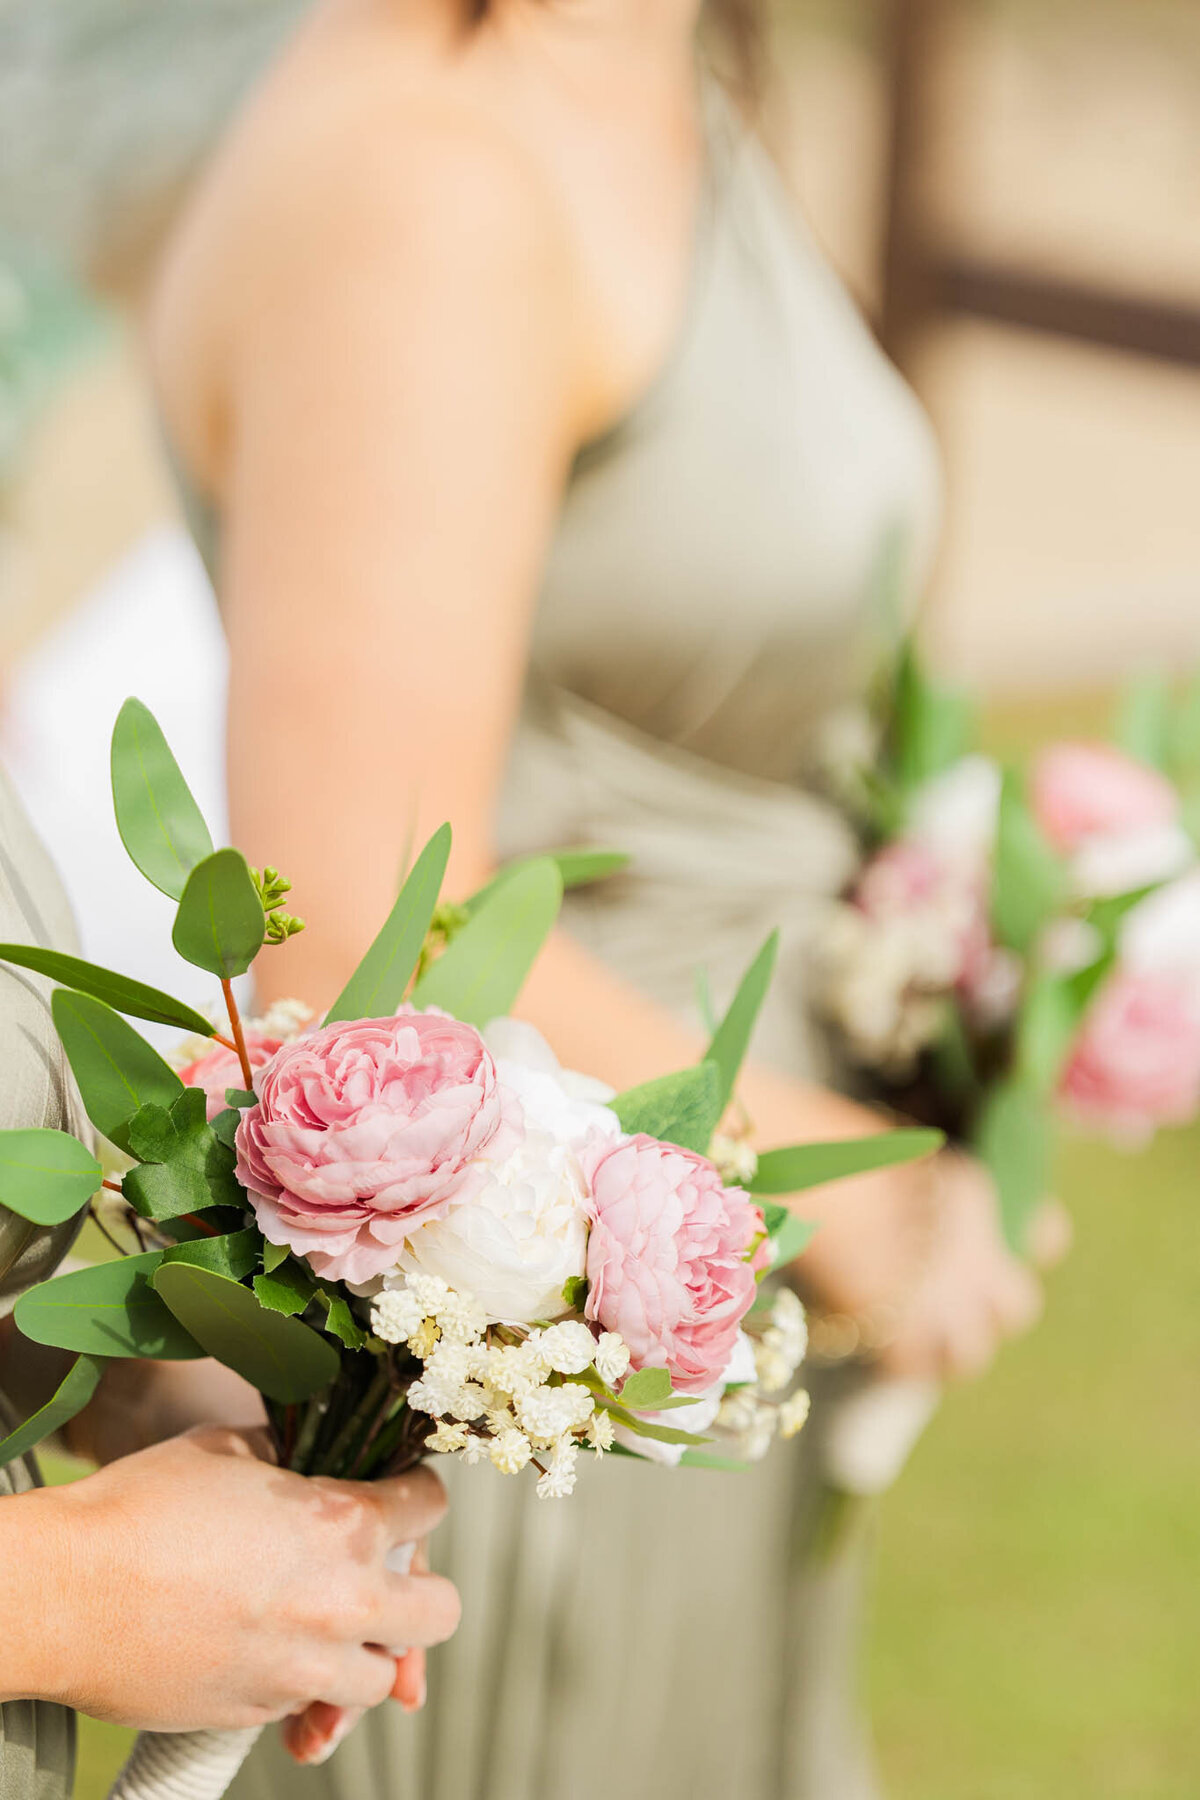 detail photograph of the bridesmaid's floral bouquet